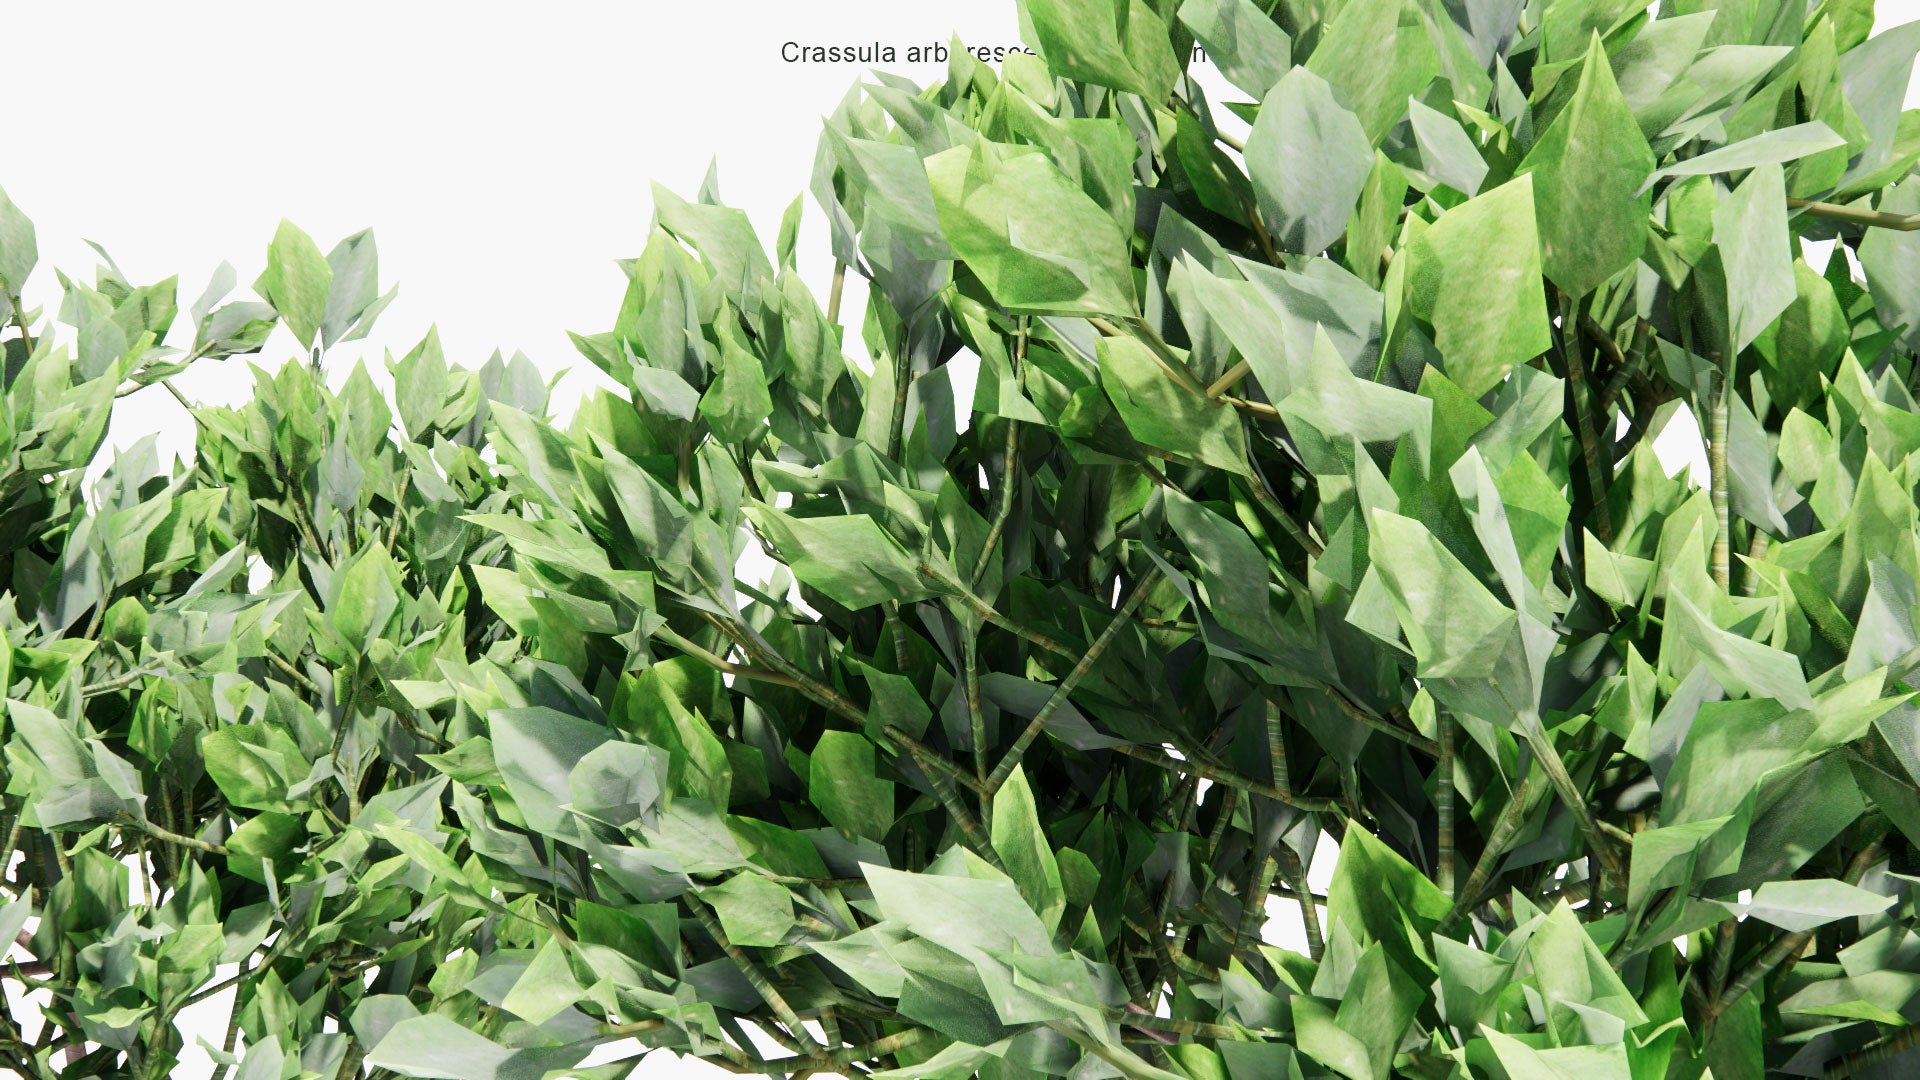 Low Poly Crassula Arborescens Subsp. Undulatifolia 'Max Cook' - Jade Plant Max Cook (3D Model)